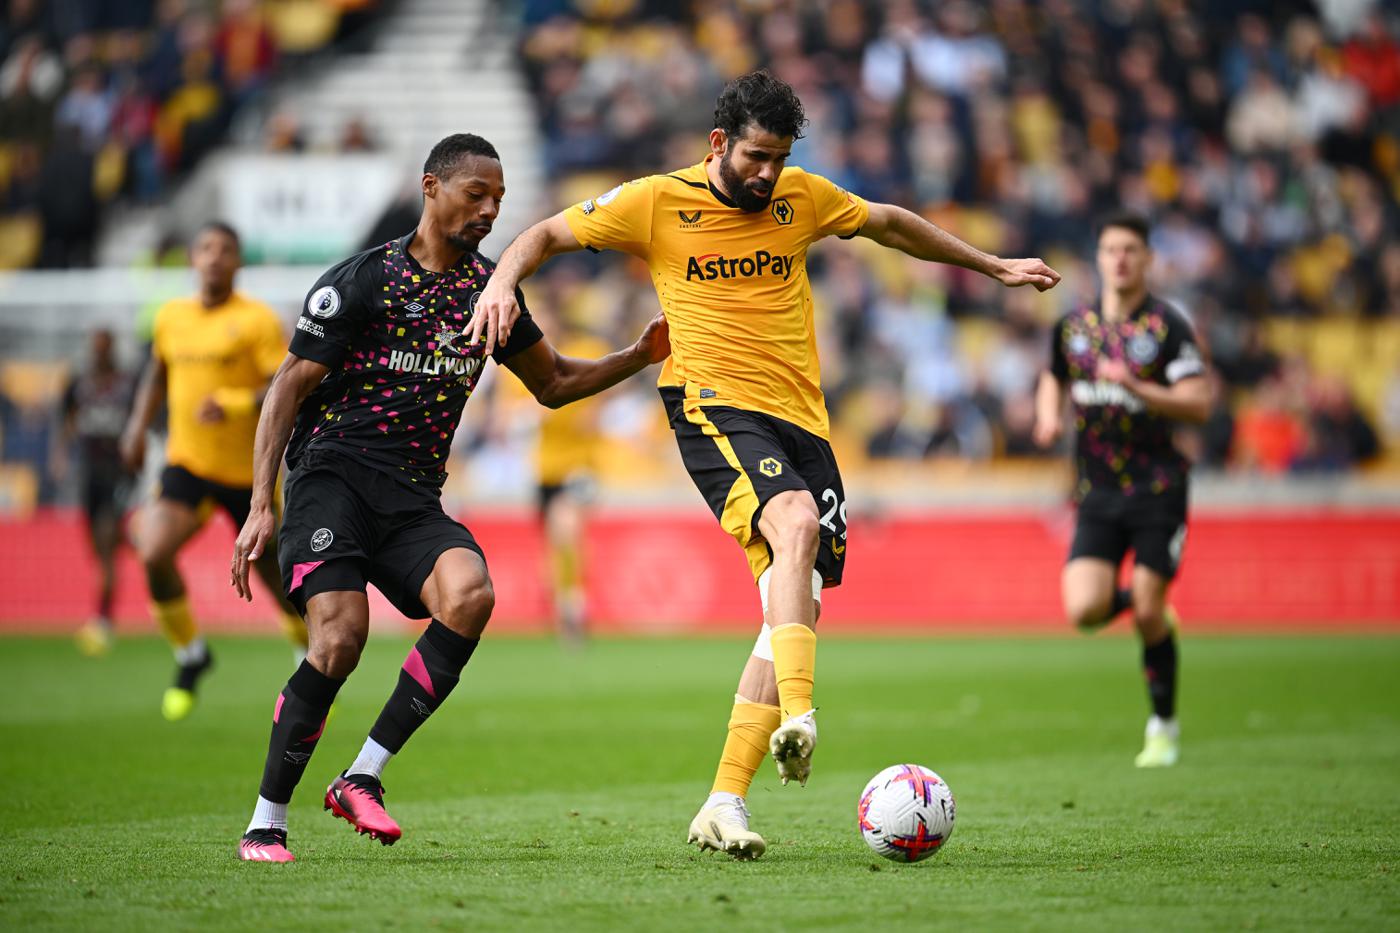 Wolverhampton - Brentford - 2:0. Championship of England, 31st round. Match review, statistics